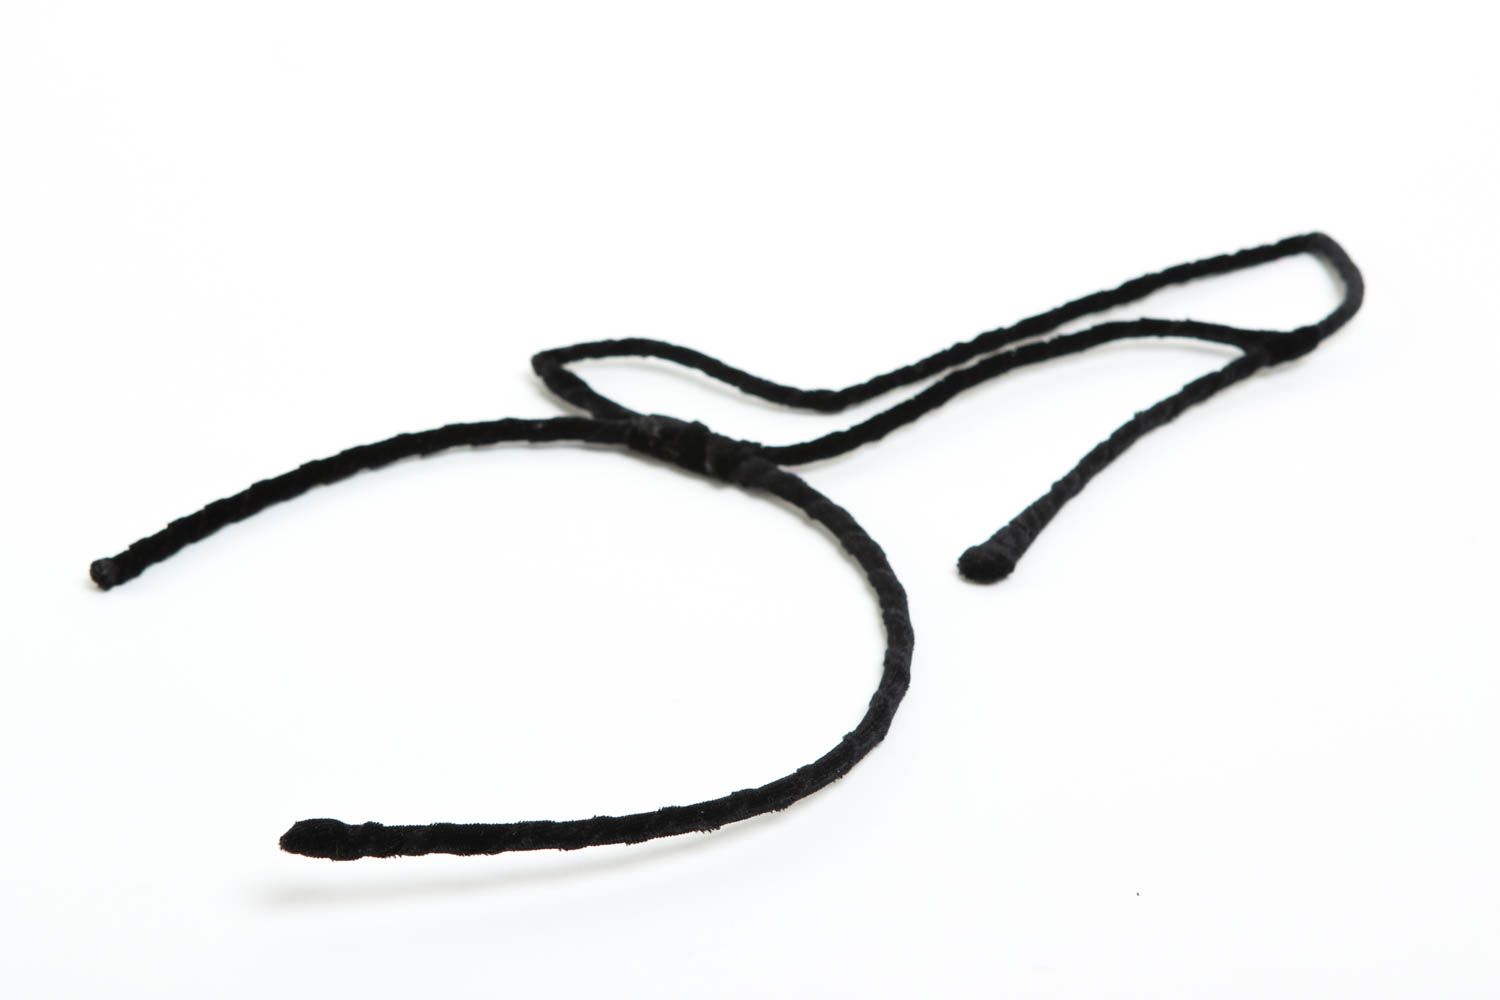 Handmade hair accessory designer headband fashionable hair band perfect gift photo 3